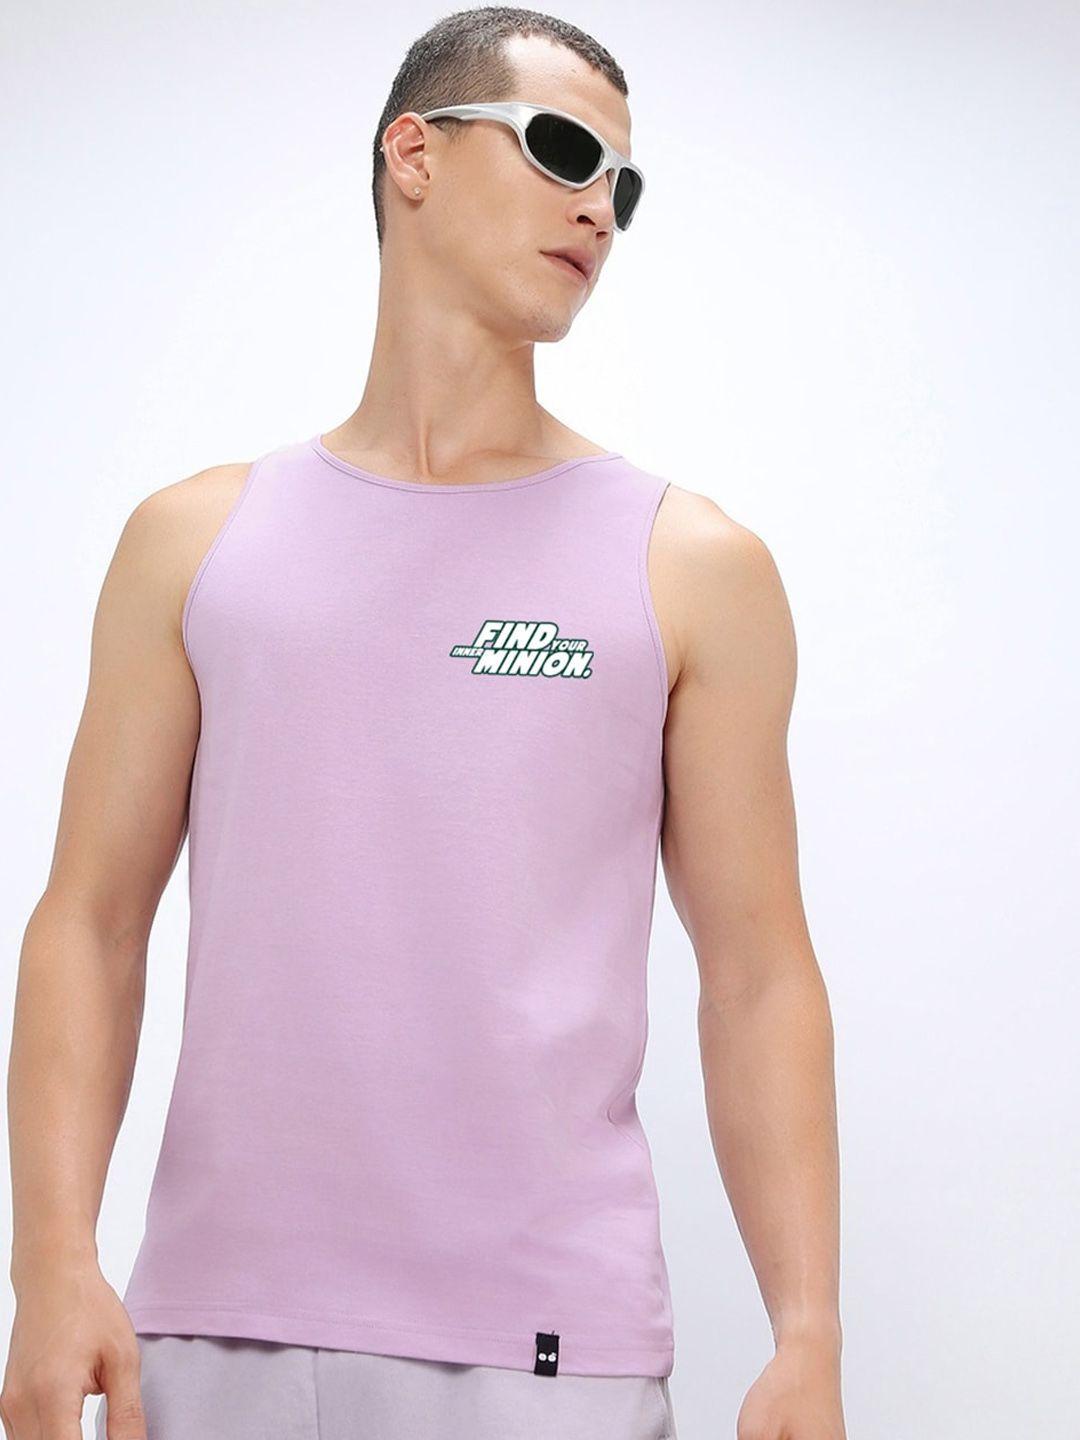 bewakoof-x-official-minions-merchandise-graphic-printed-cotton-vest